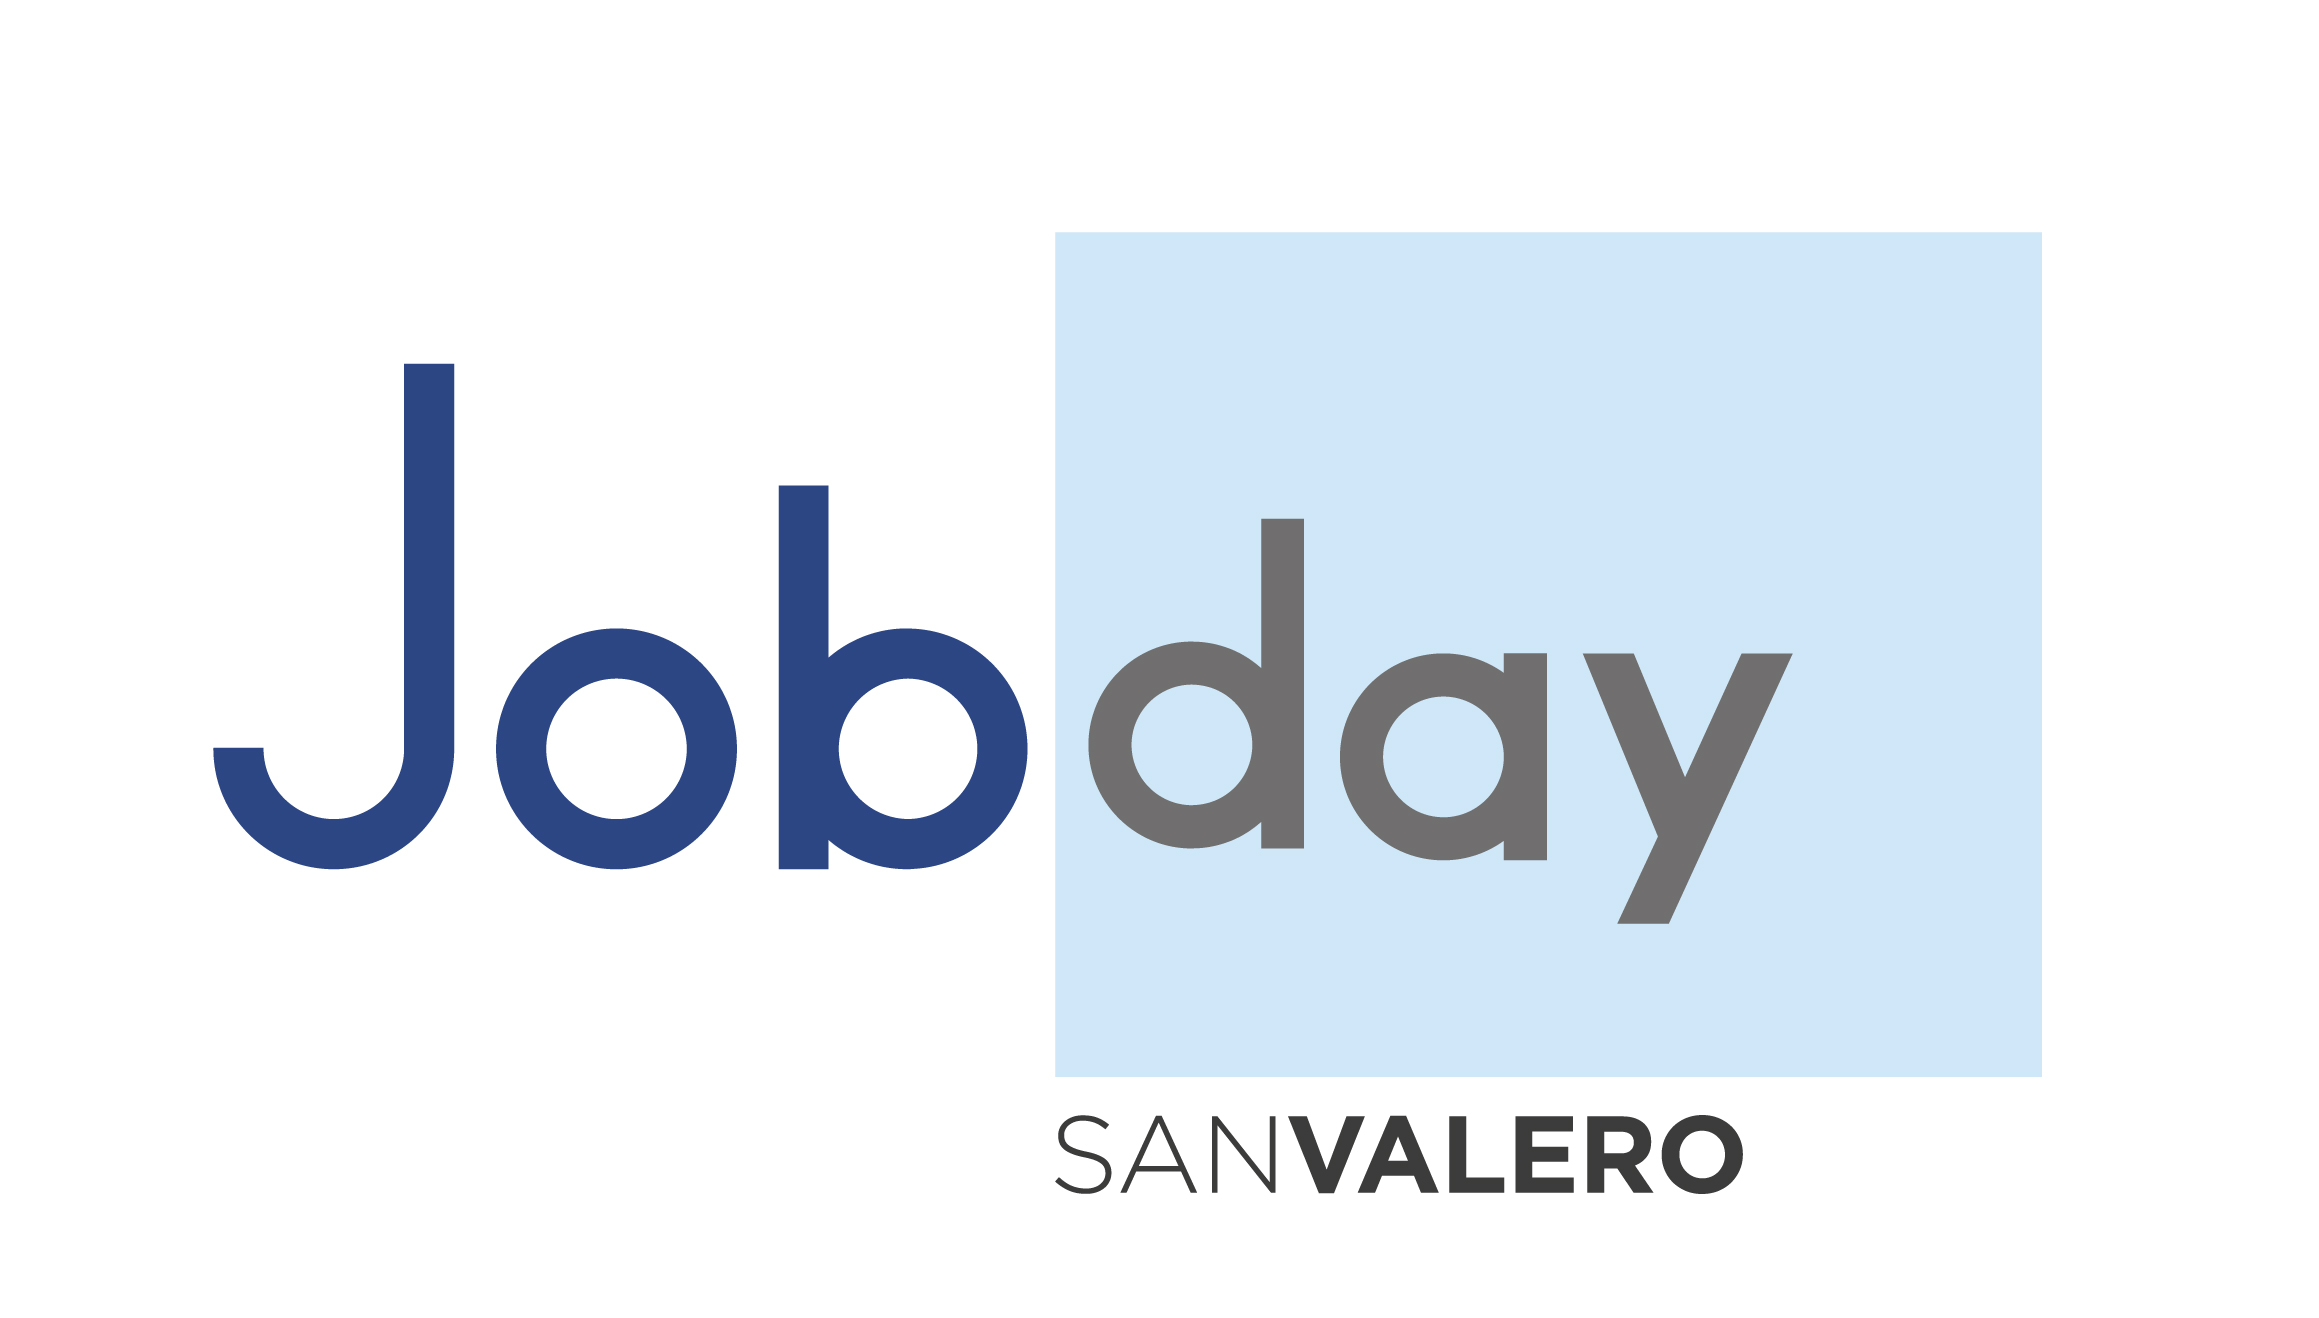 Logo Job Day